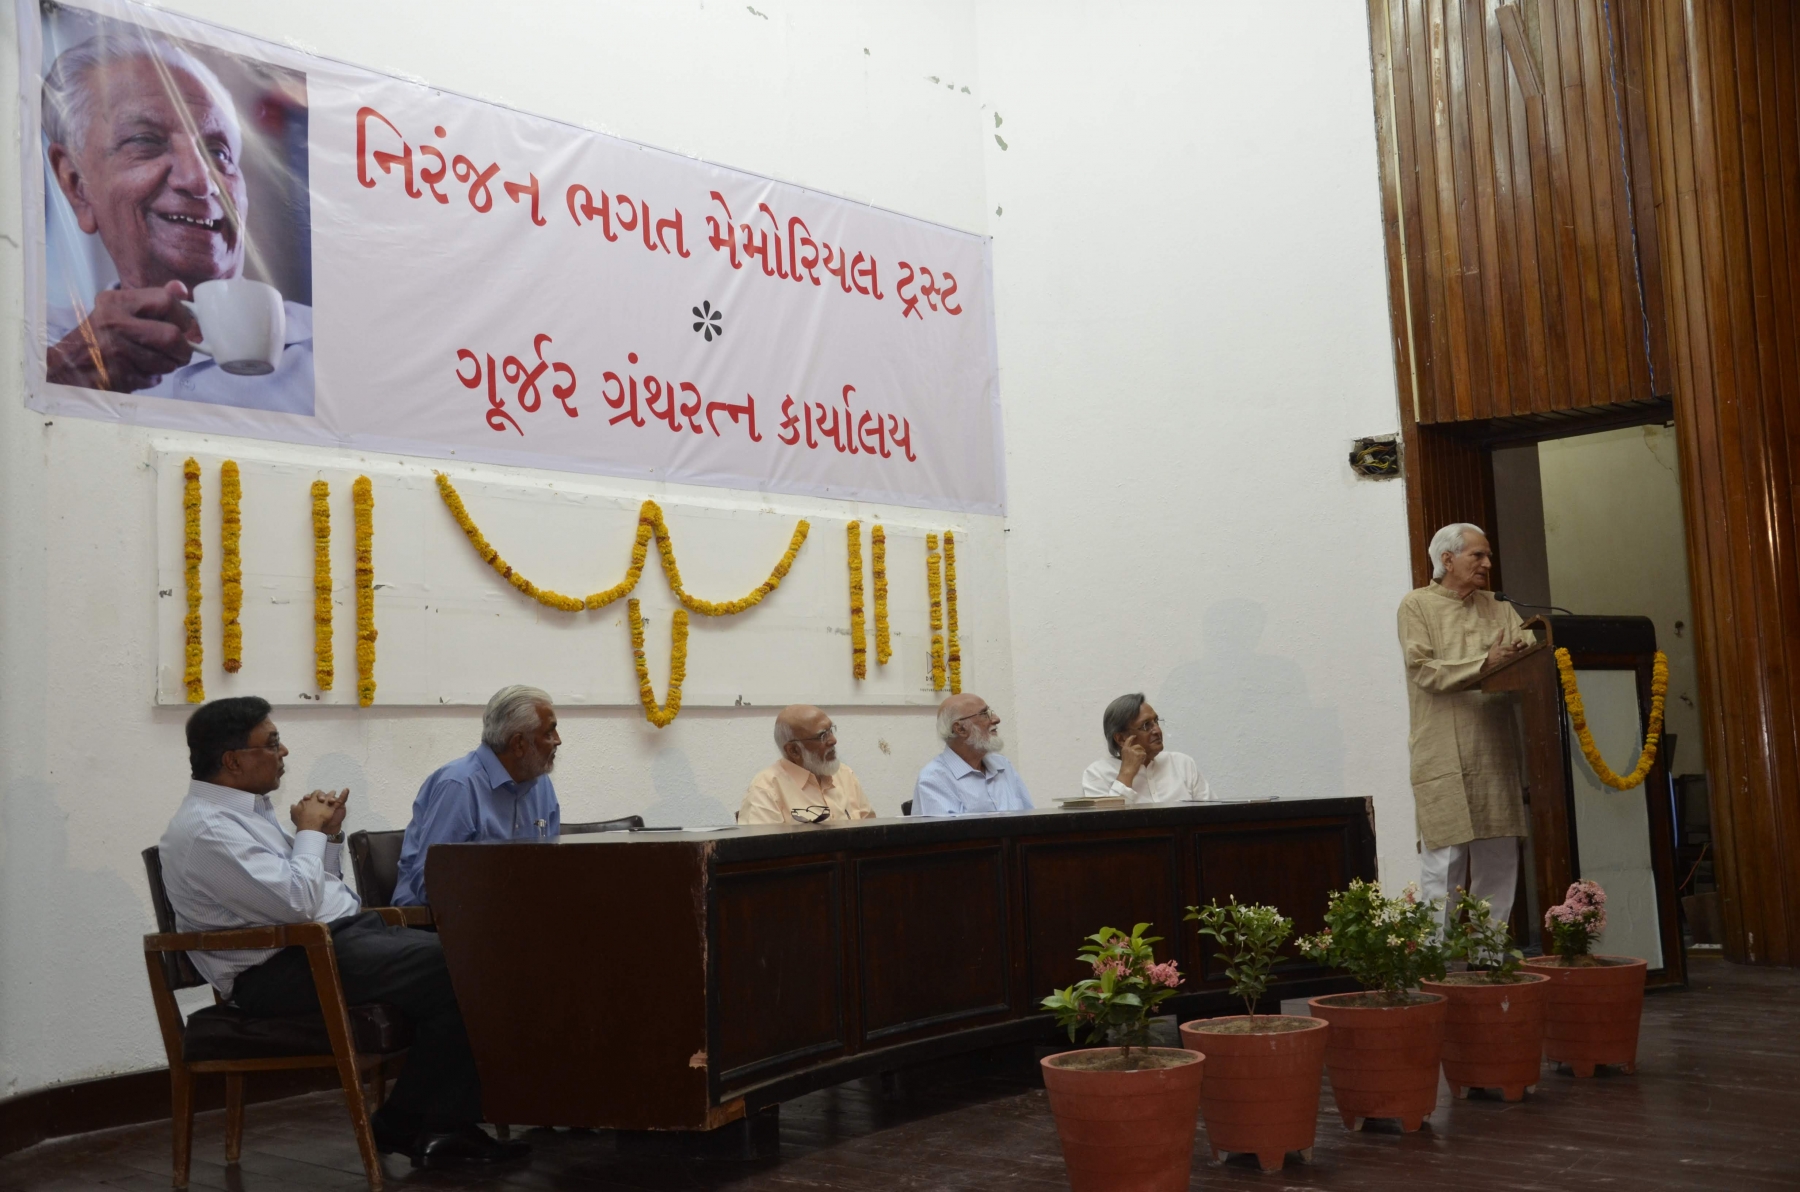 Shri Raghuvir Chaudhary’s talk at the event